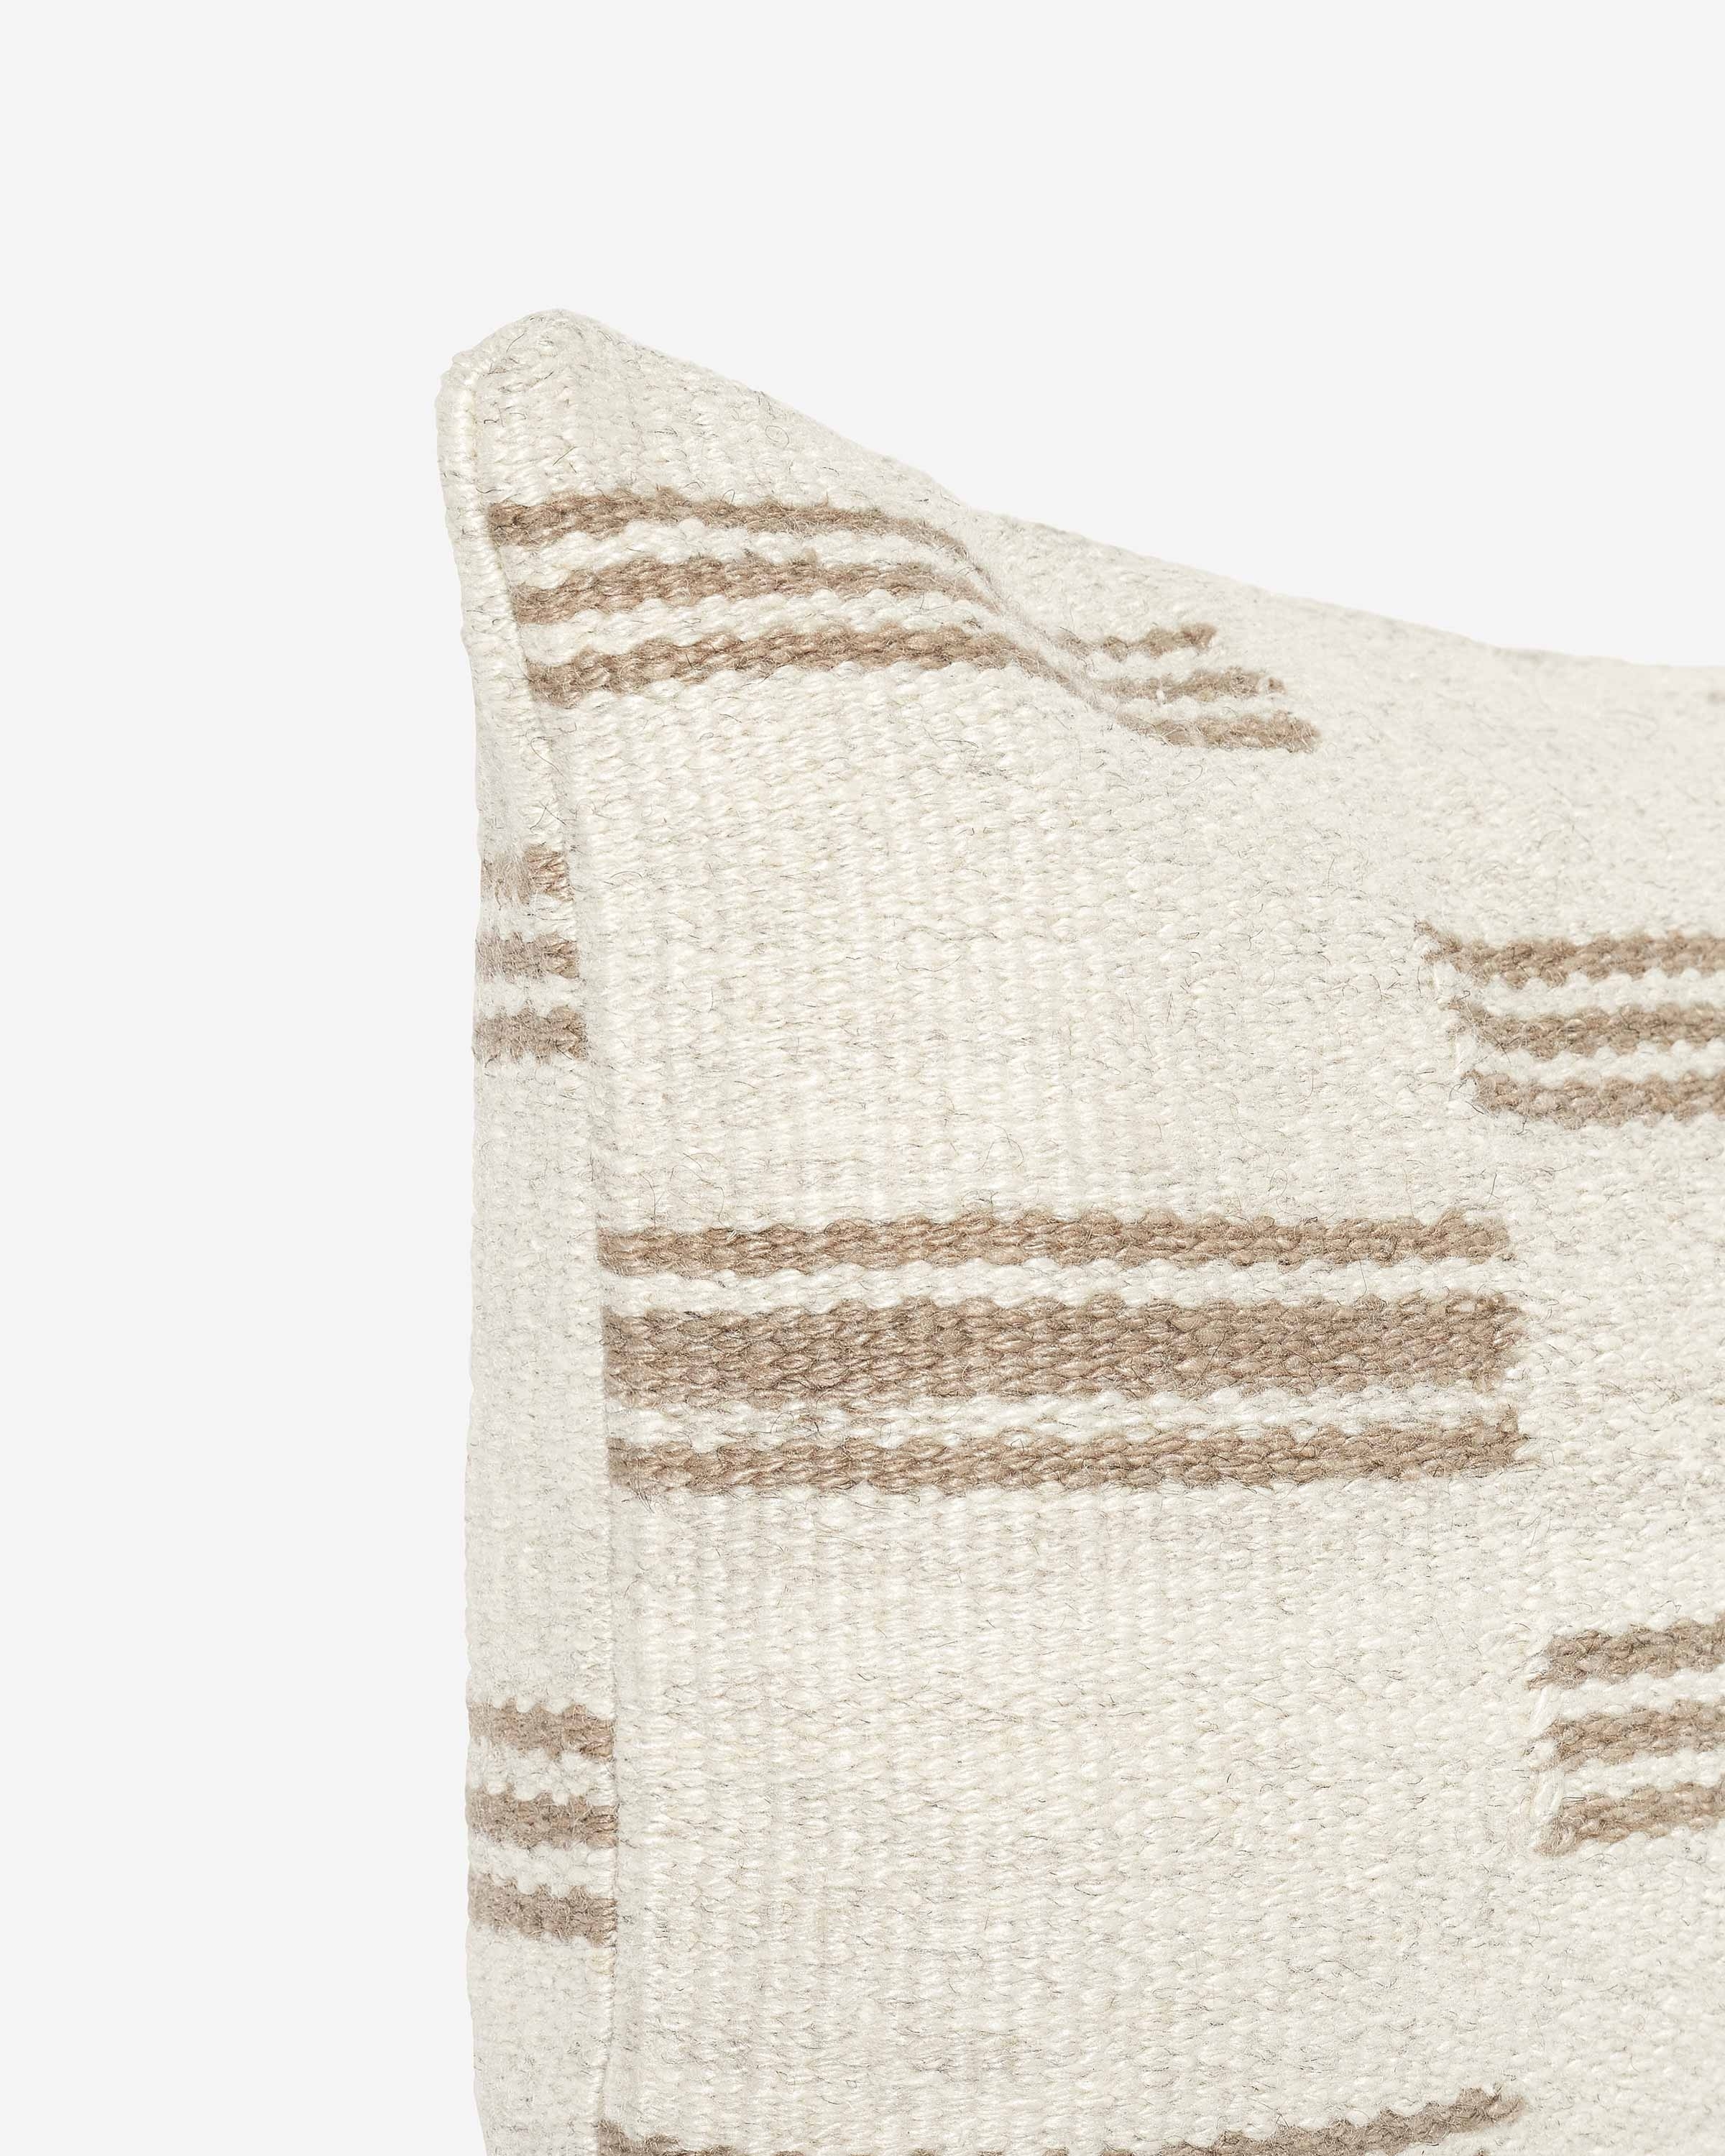 Stripe Break Lumbar Pillow By Sarah Sherman Samuel, 12" x 20" - Image 2